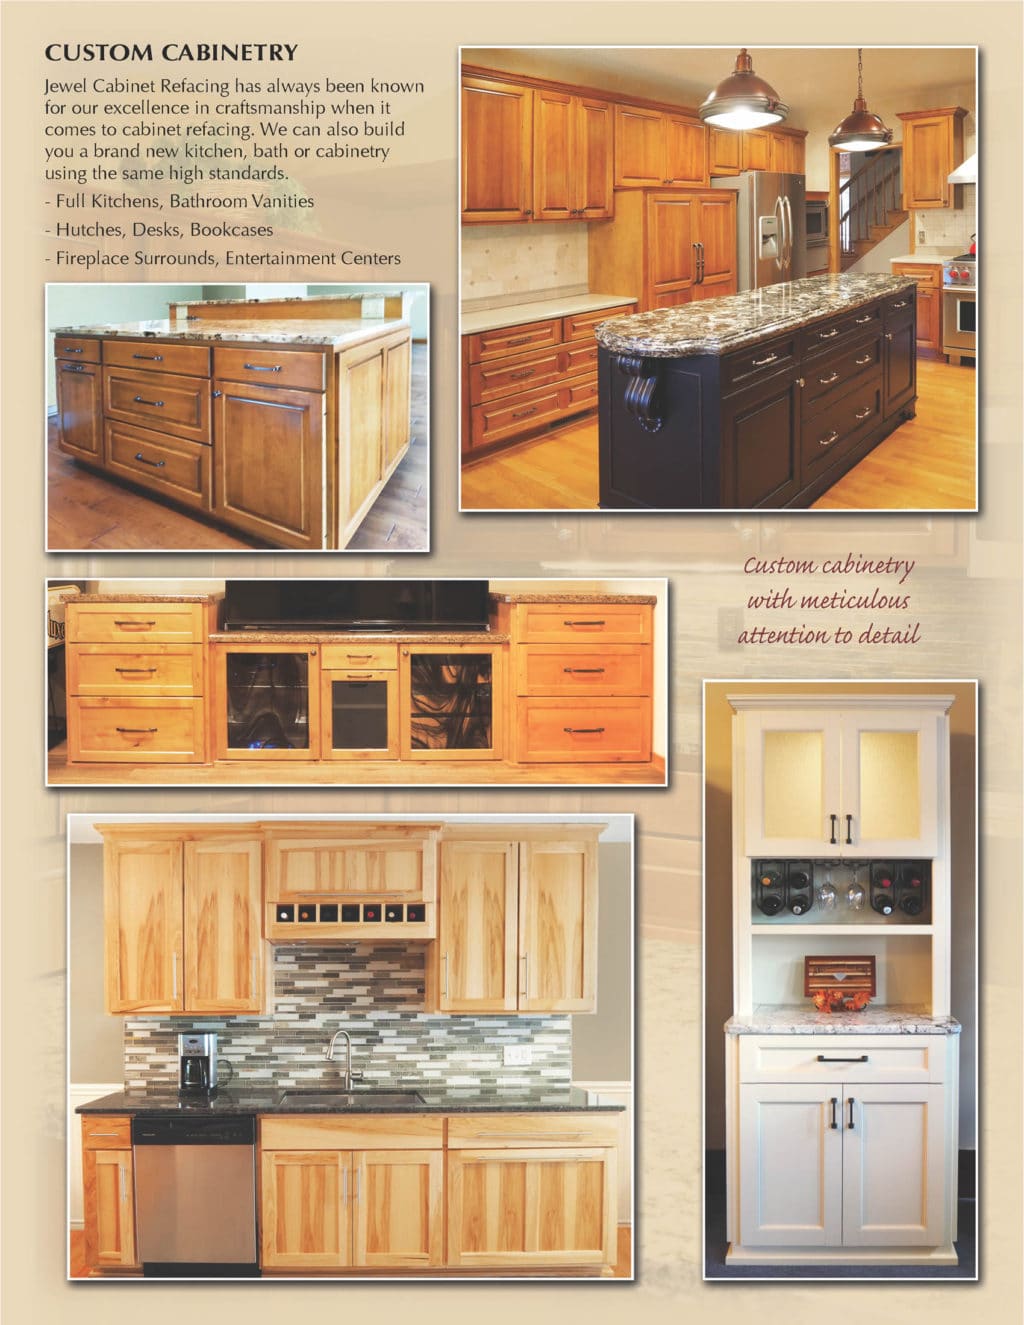 Jewel Cabinet Refacing brochure page 7